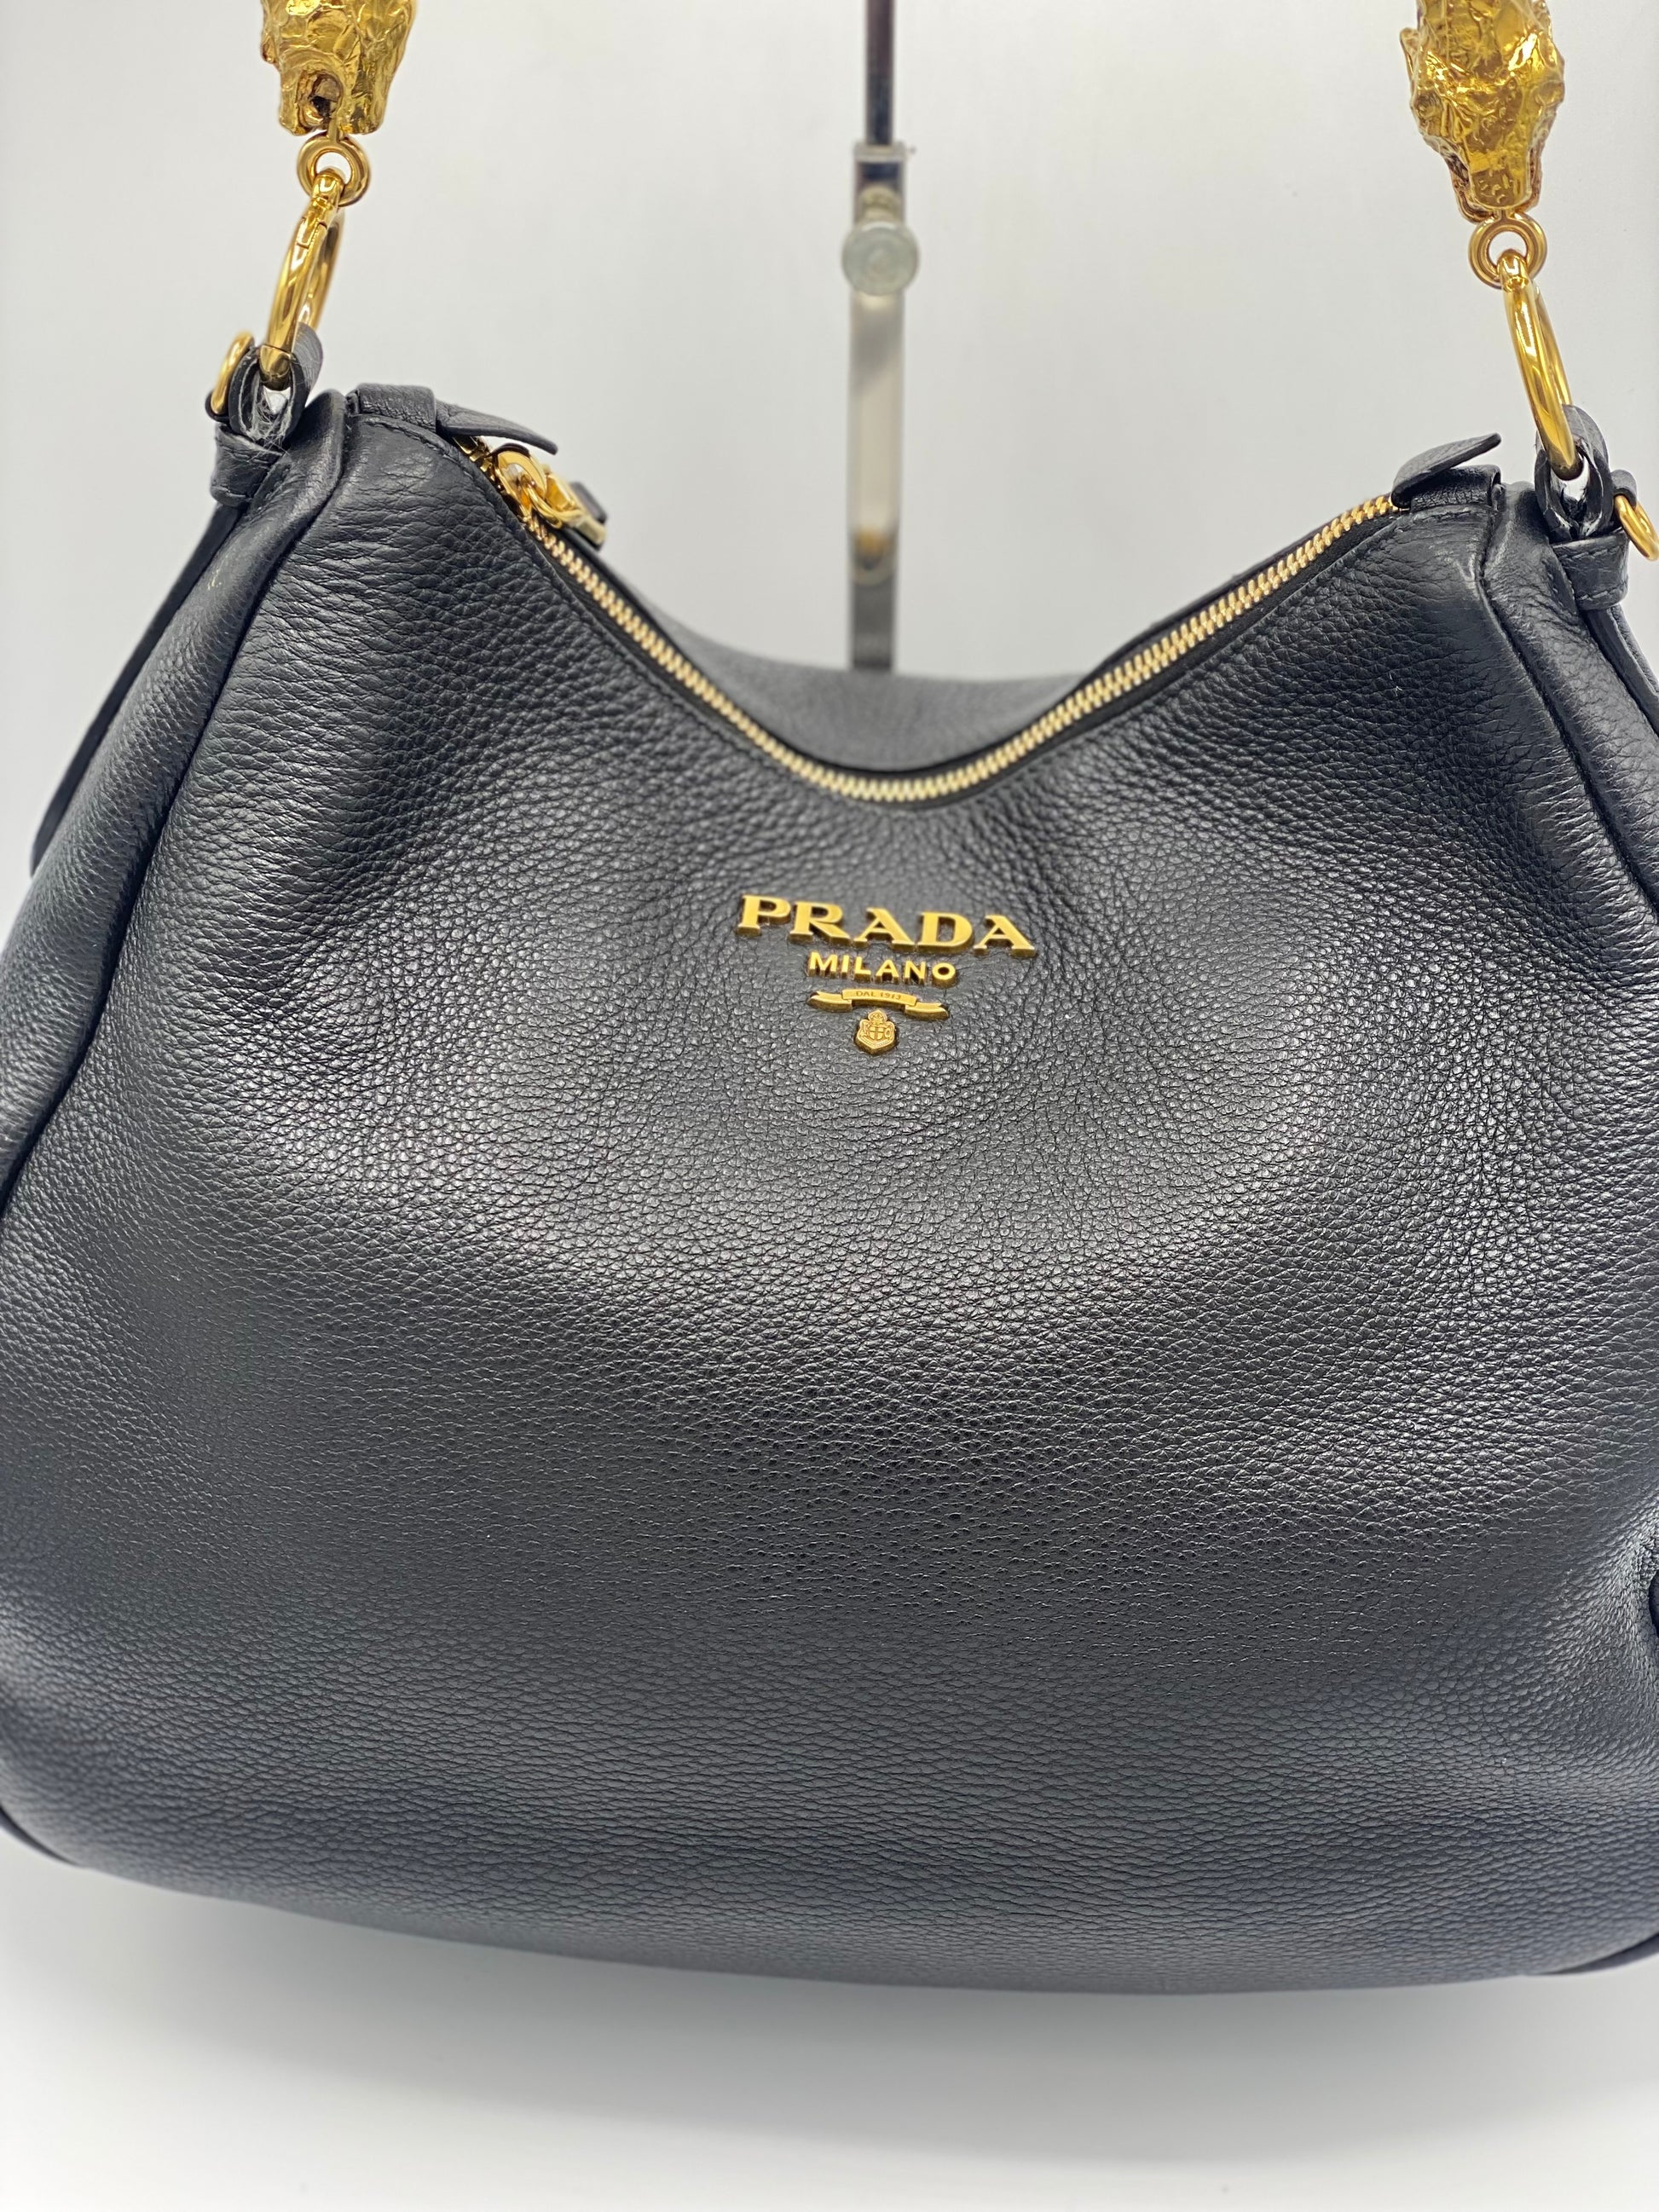 Cartera Prada Zip Handbag – The New Black